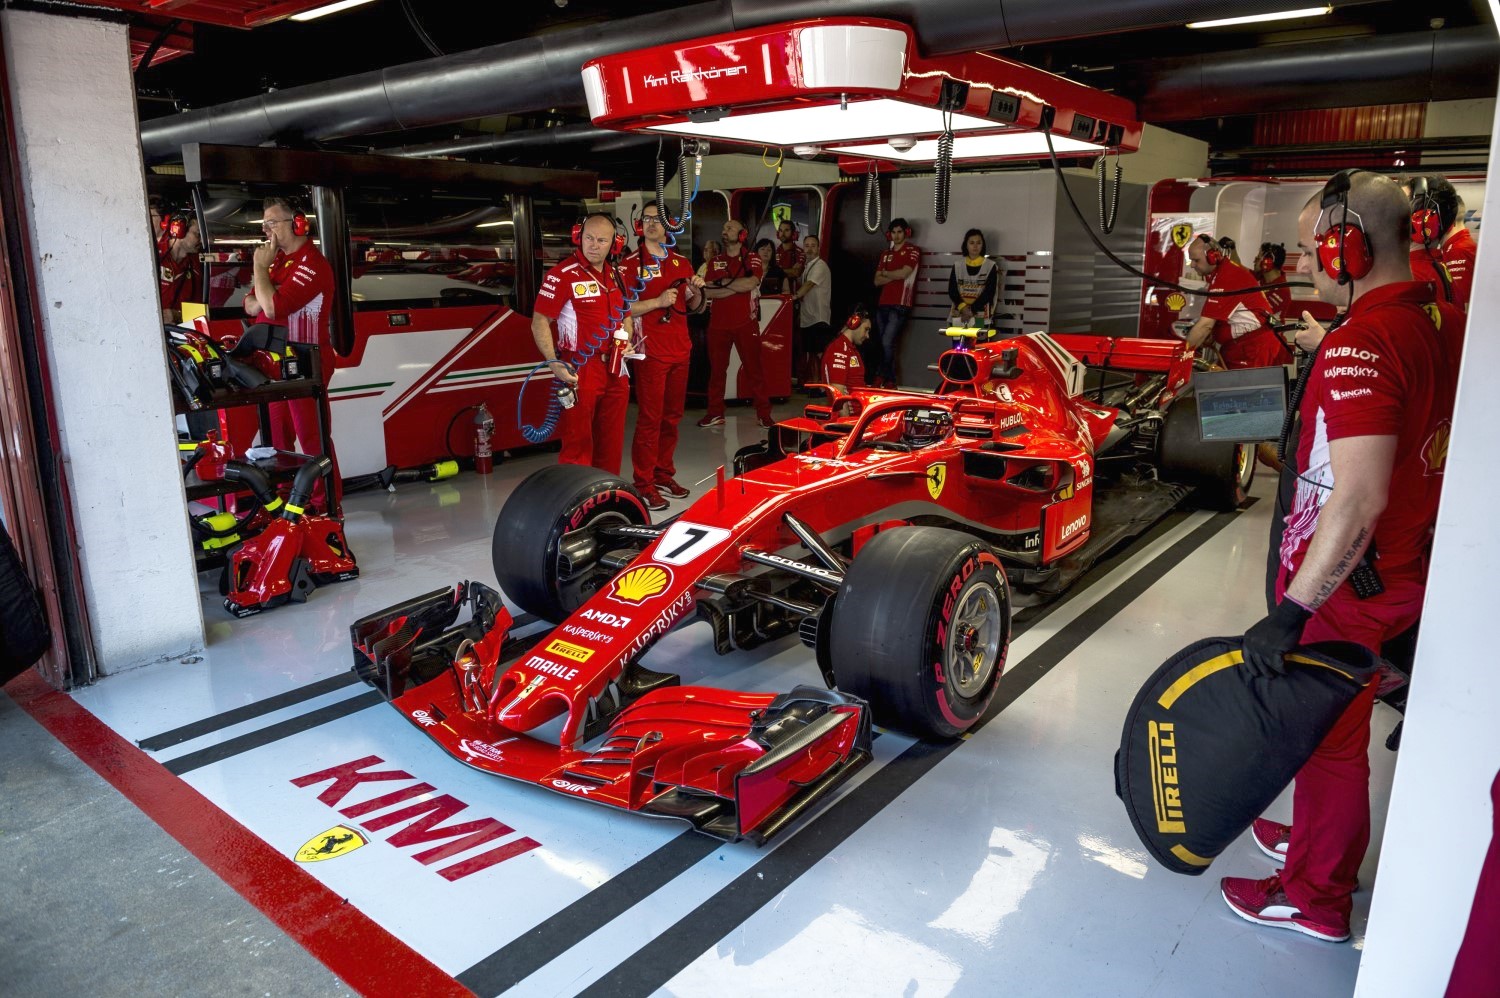 This year's Ferrari has been to Raikkonen's liking